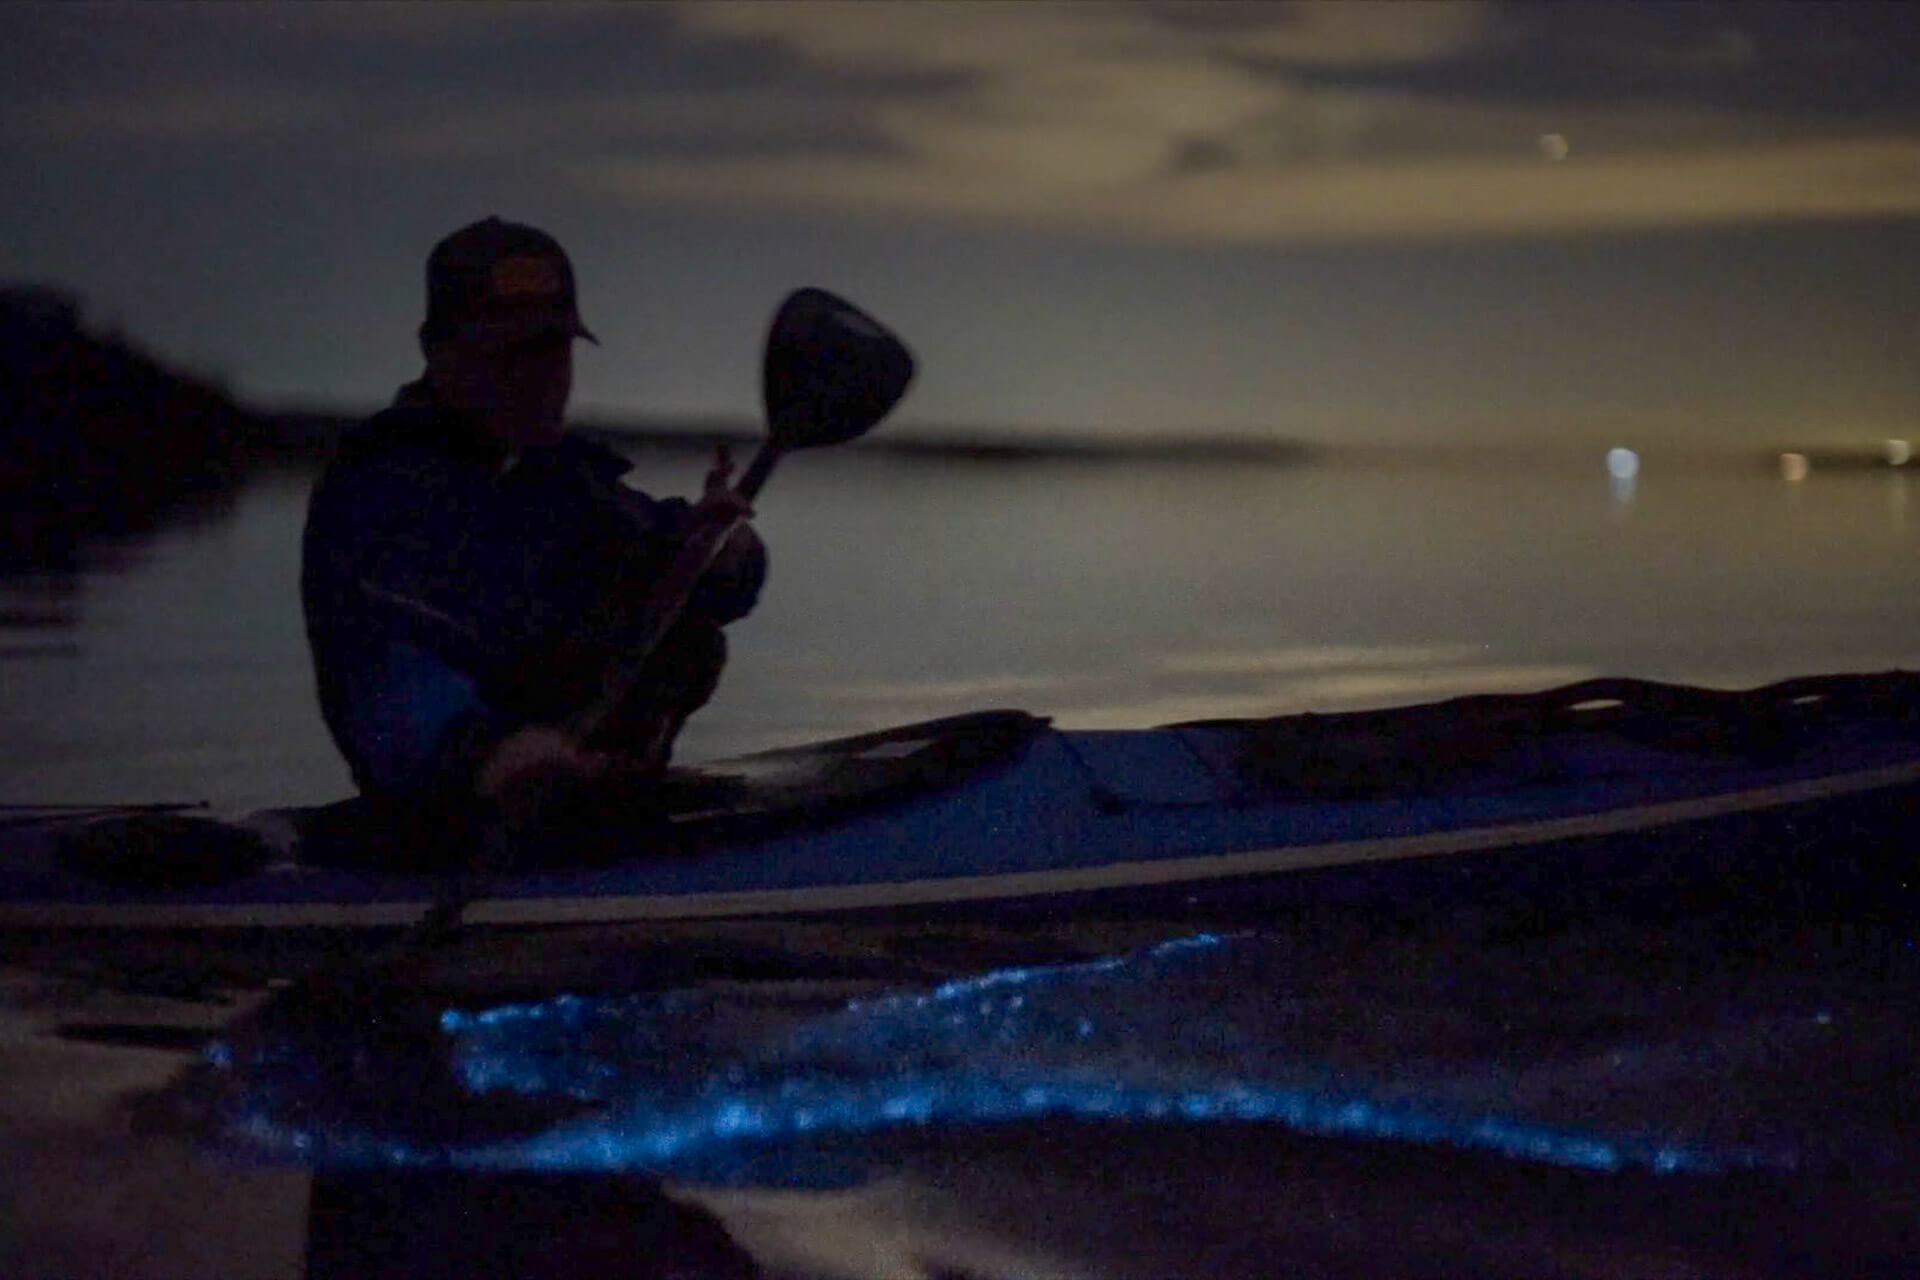 A kayaker disturbs water with his paddle at night, causing bioluminescence.